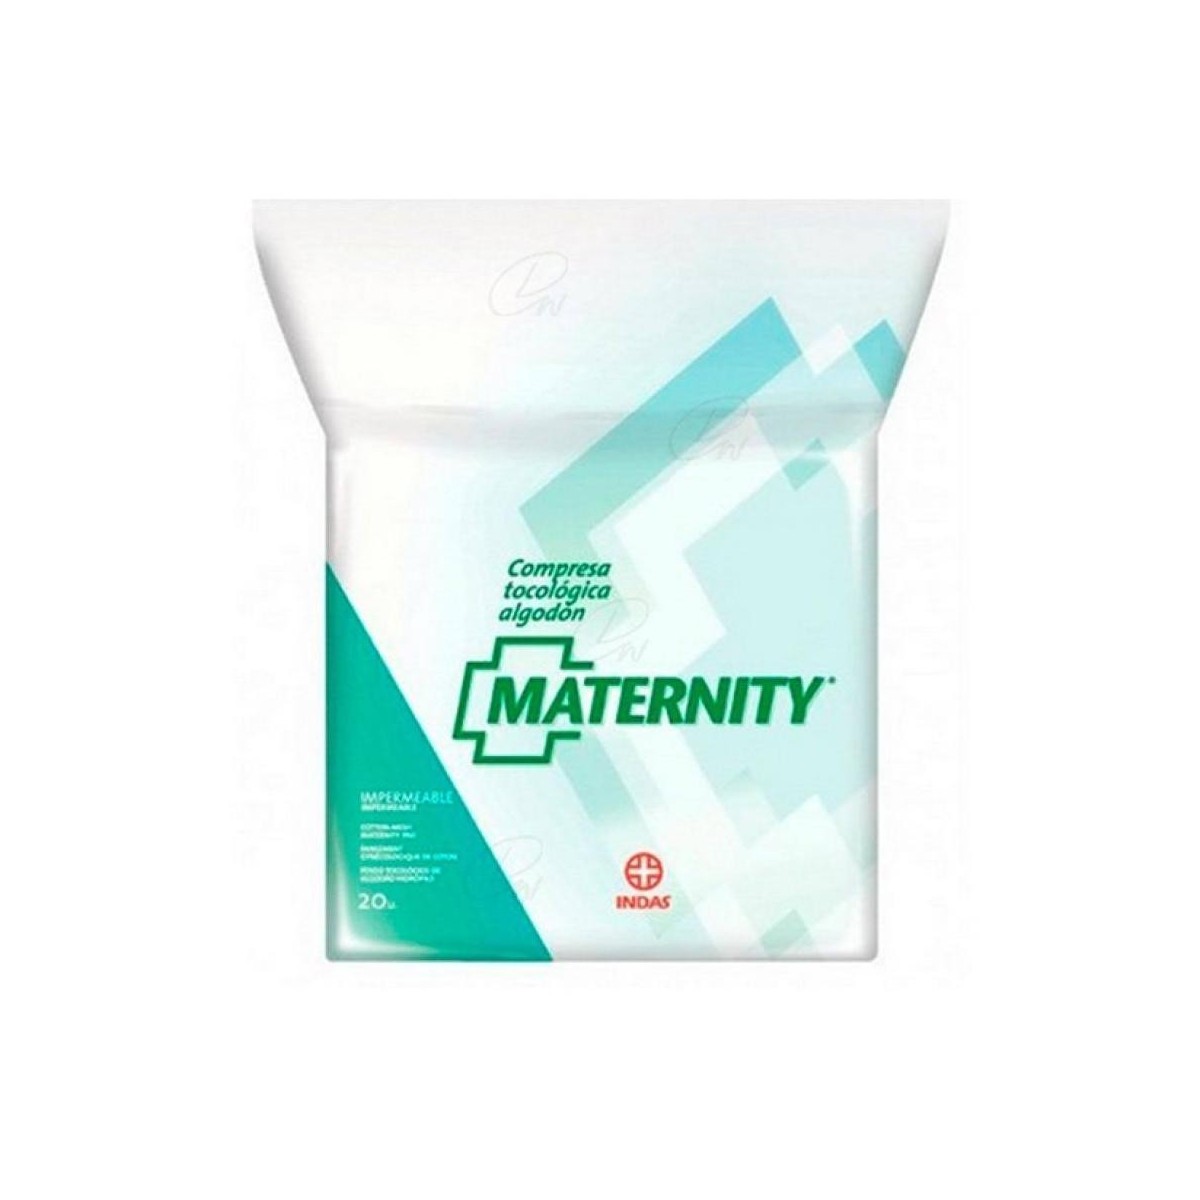 maternity-20-compresas-algodon